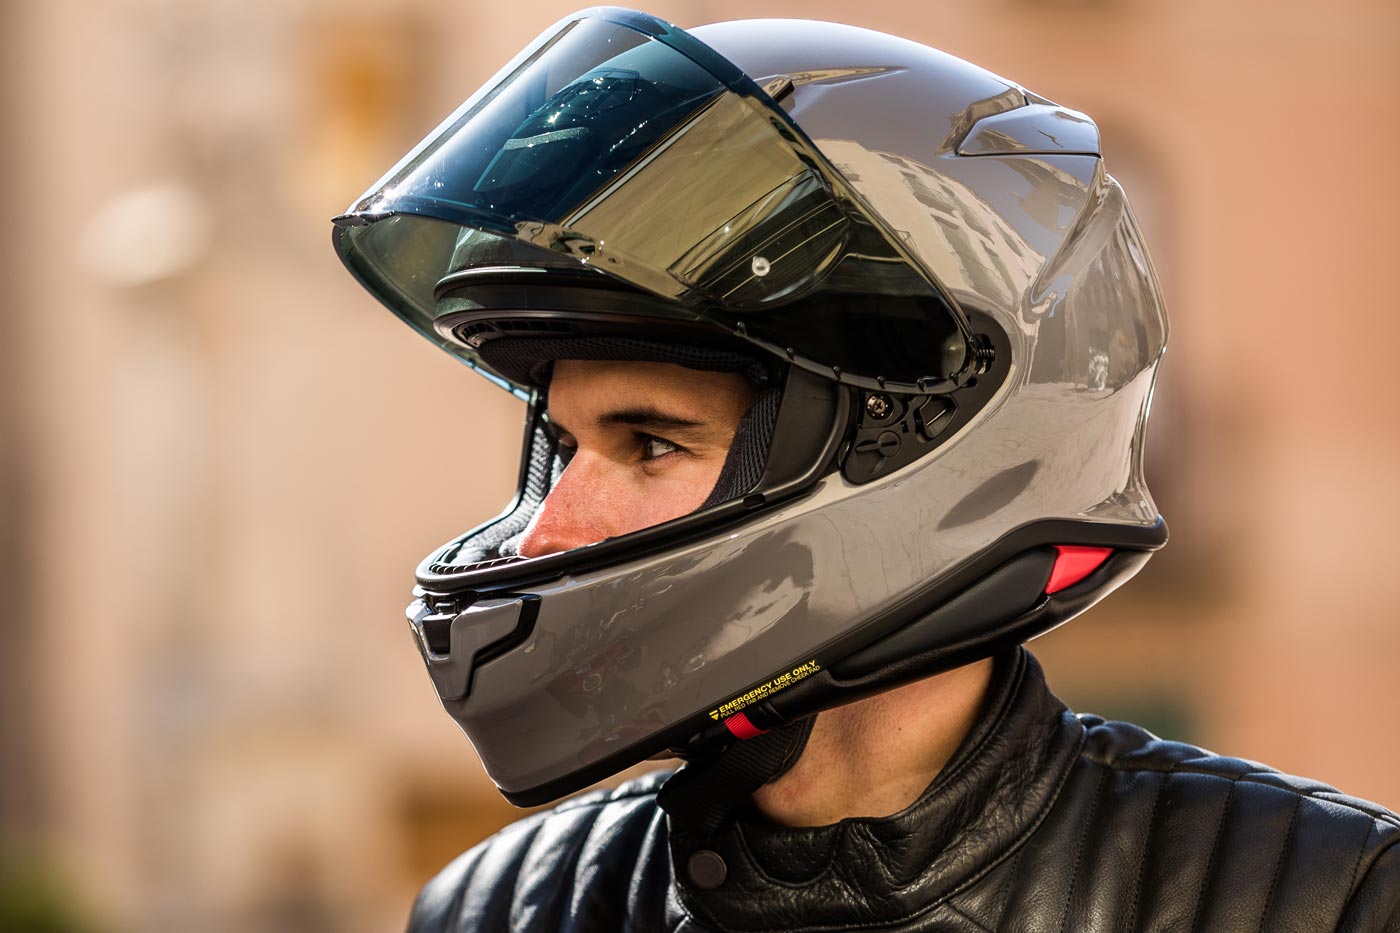 NXR2 - Shoei: Safest helmets in the world